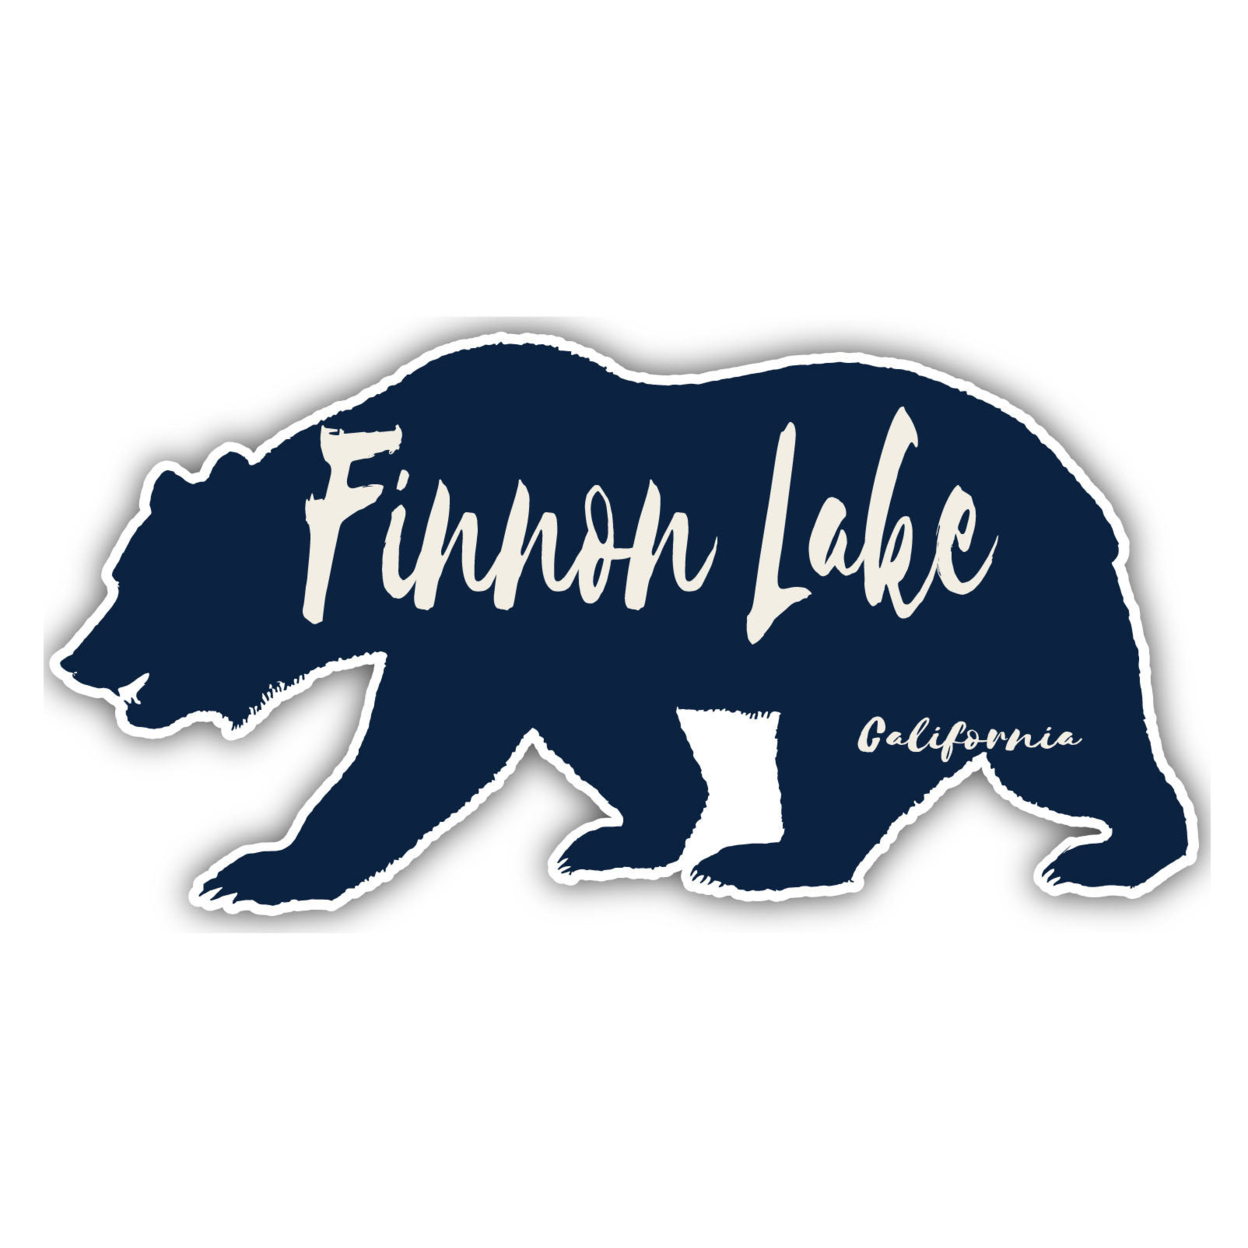 Finnon Lake California Souvenir Decorative Stickers (Choose Theme And Size) - Single Unit, 4-Inch, Camp Life